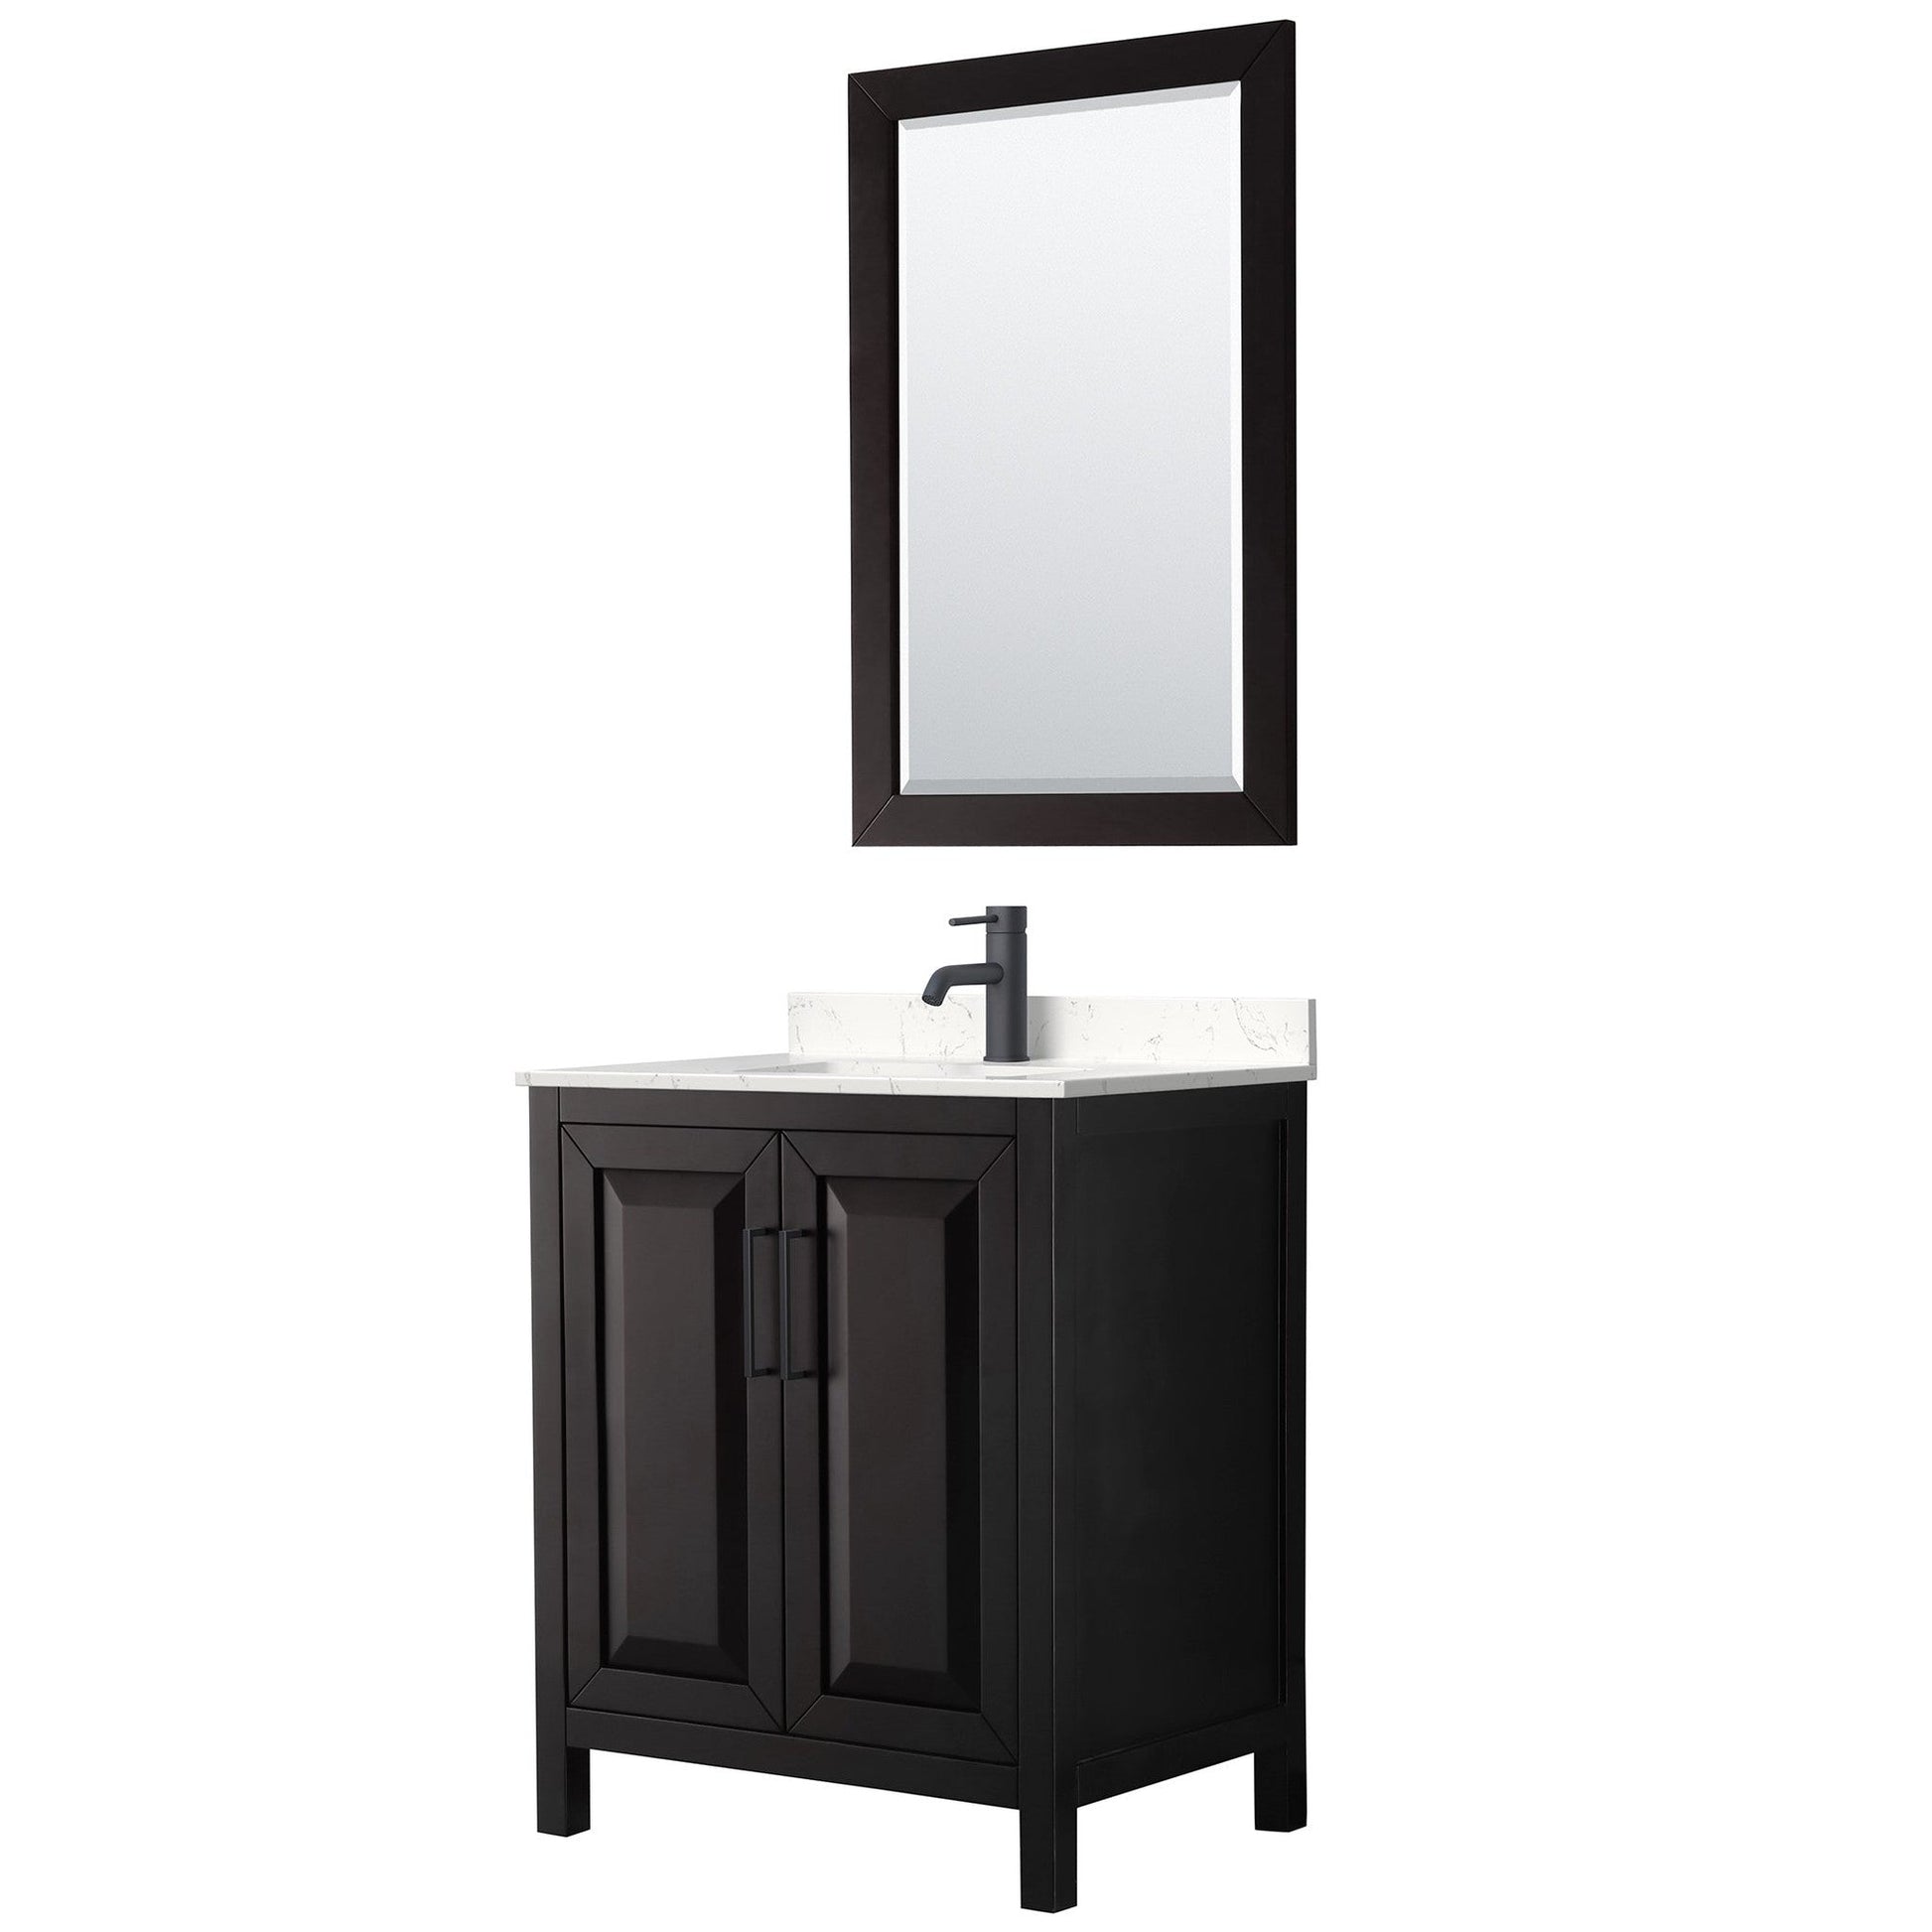 Daria 30" Single Bathroom Vanity in Dark Espresso, Carrara Cultured Marble Countertop, Undermount Square Sink, Matte Black Trim, 24" Mirror